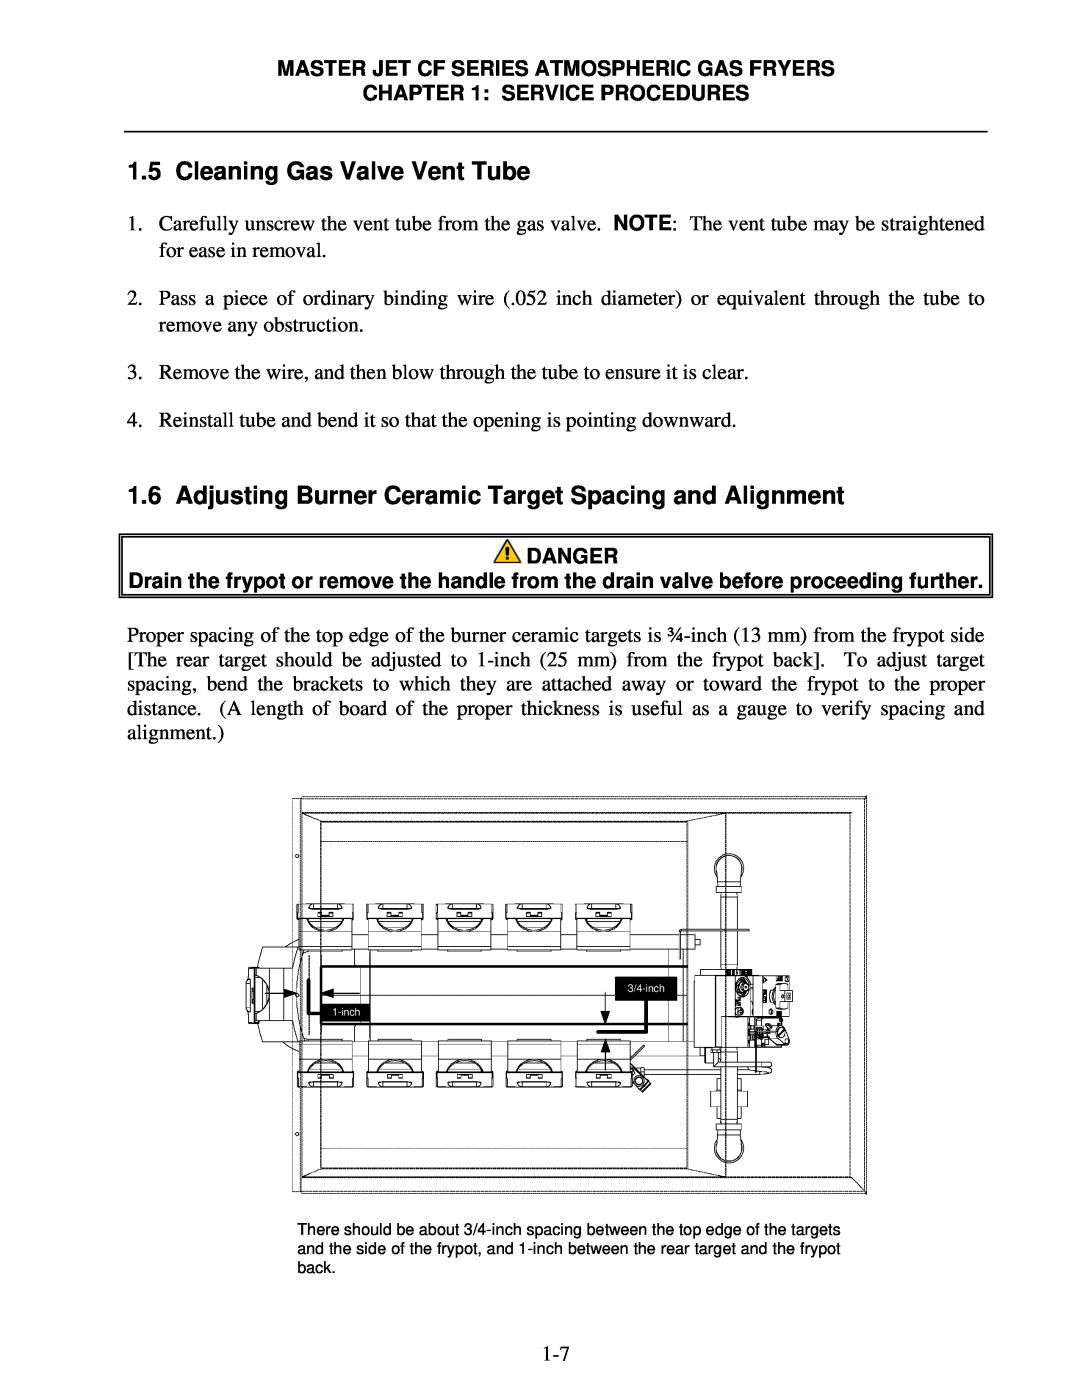 Frymaster MJCFE Cleaning Gas Valve Vent Tube, Adjusting Burner Ceramic Target Spacing and Alignment, Service Procedures 